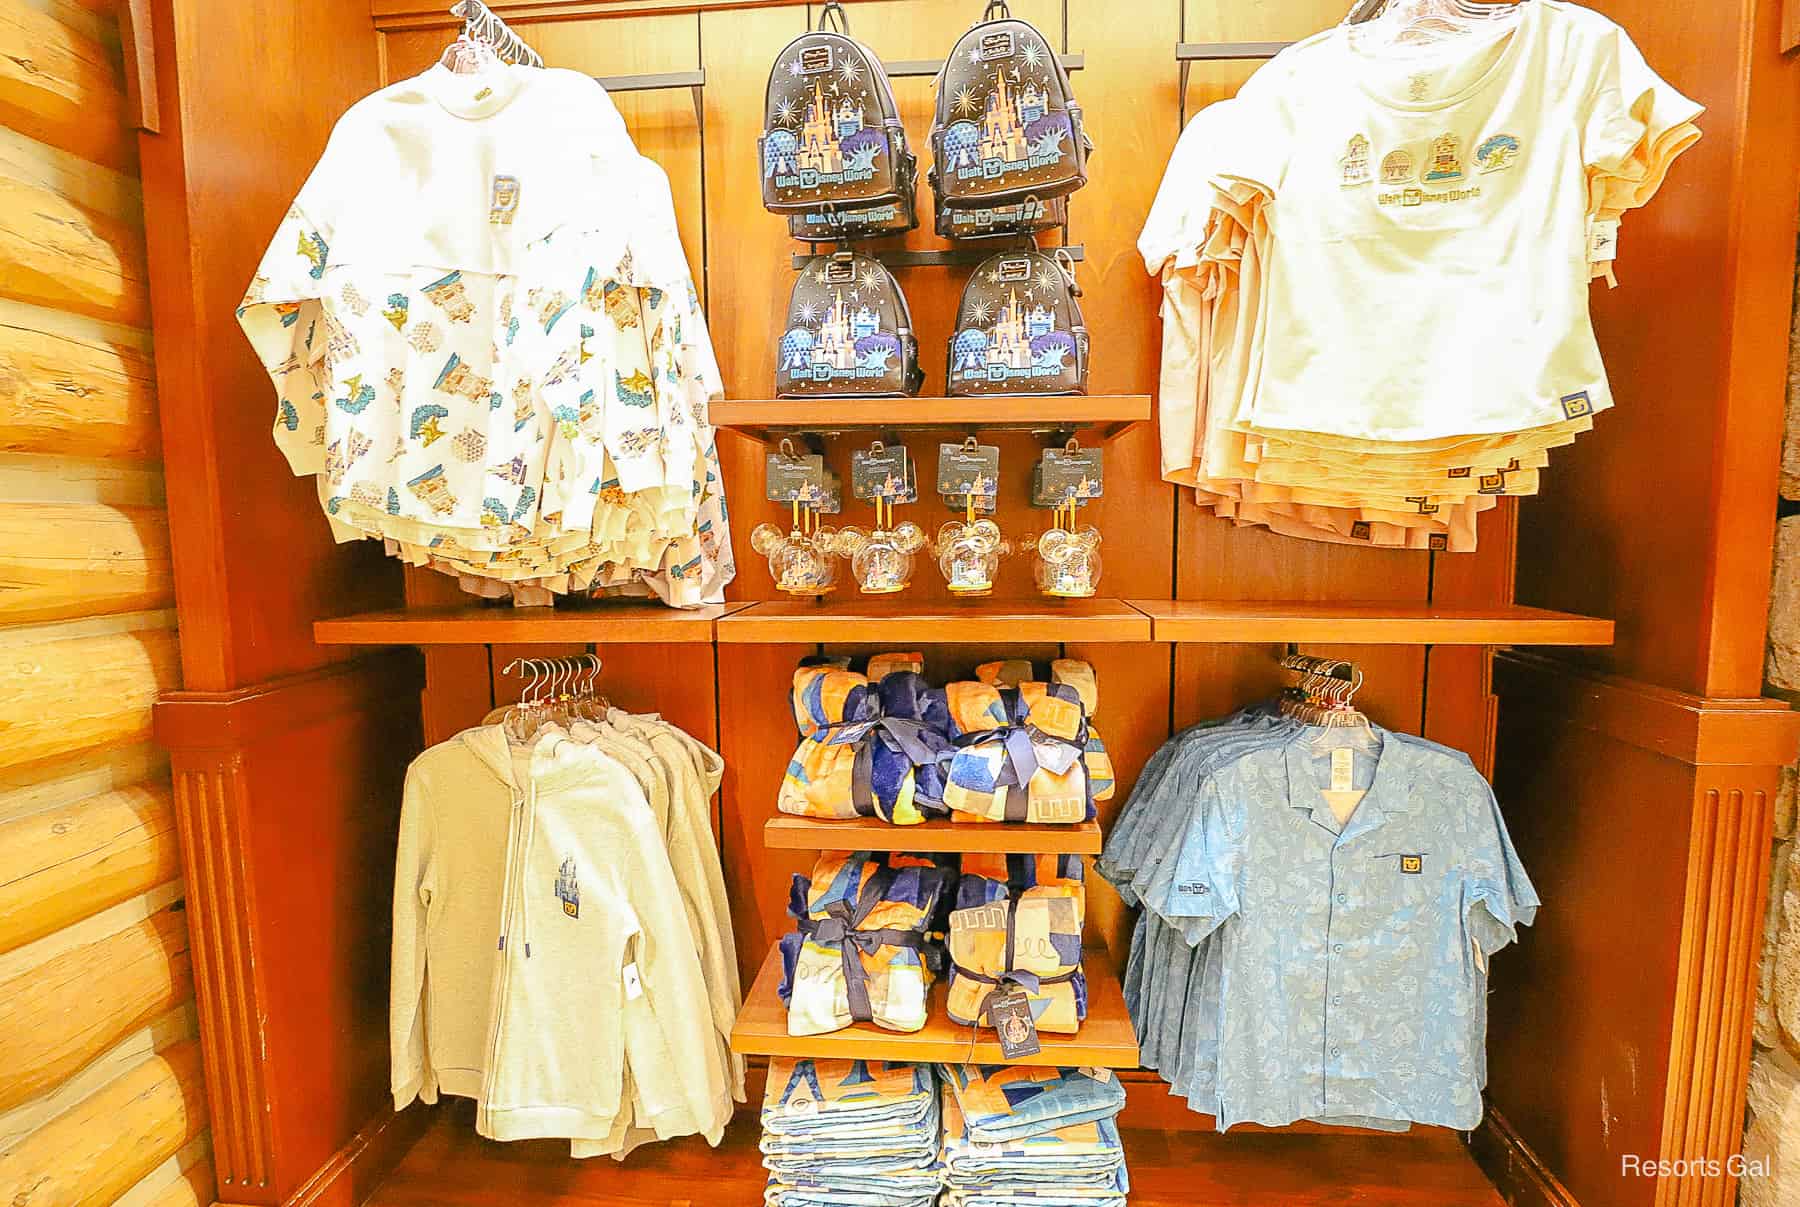 Disney merchandise like backpacks, clothing, and ornaments 